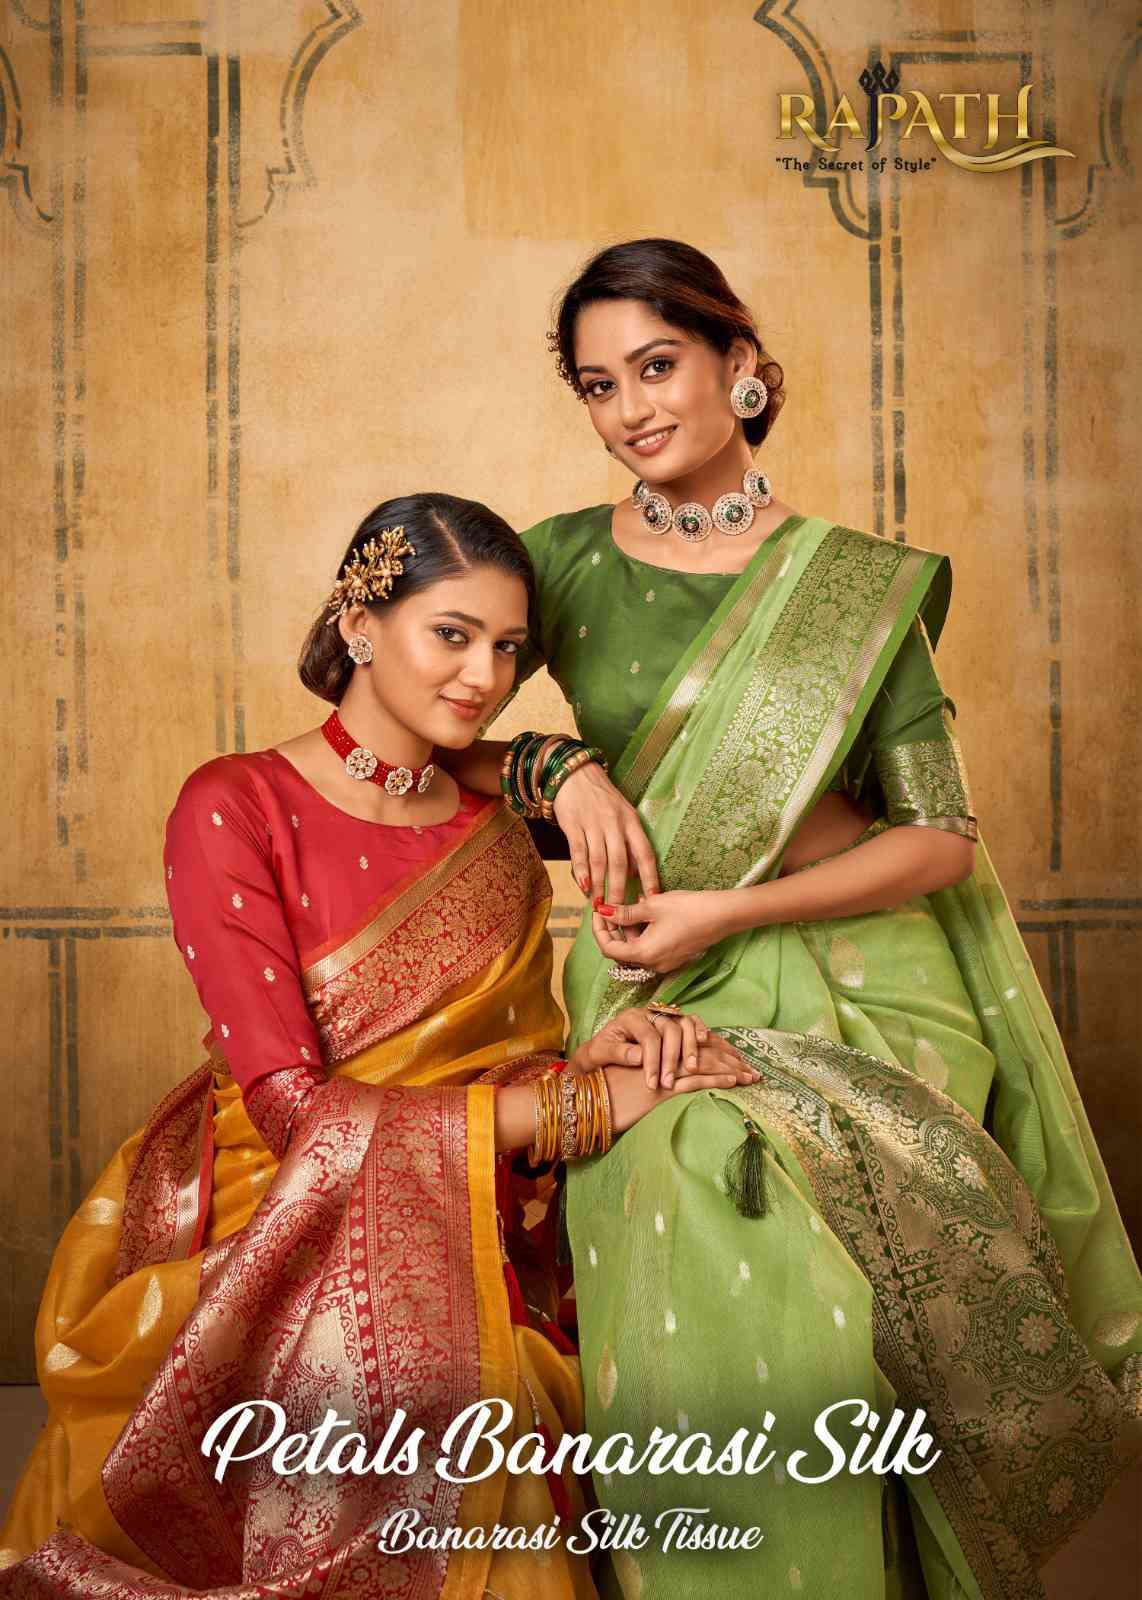 Rajpath Petals Banarasi Silk 81001 To 81006 Festive Collection Banarasi Silk Saree Supplier